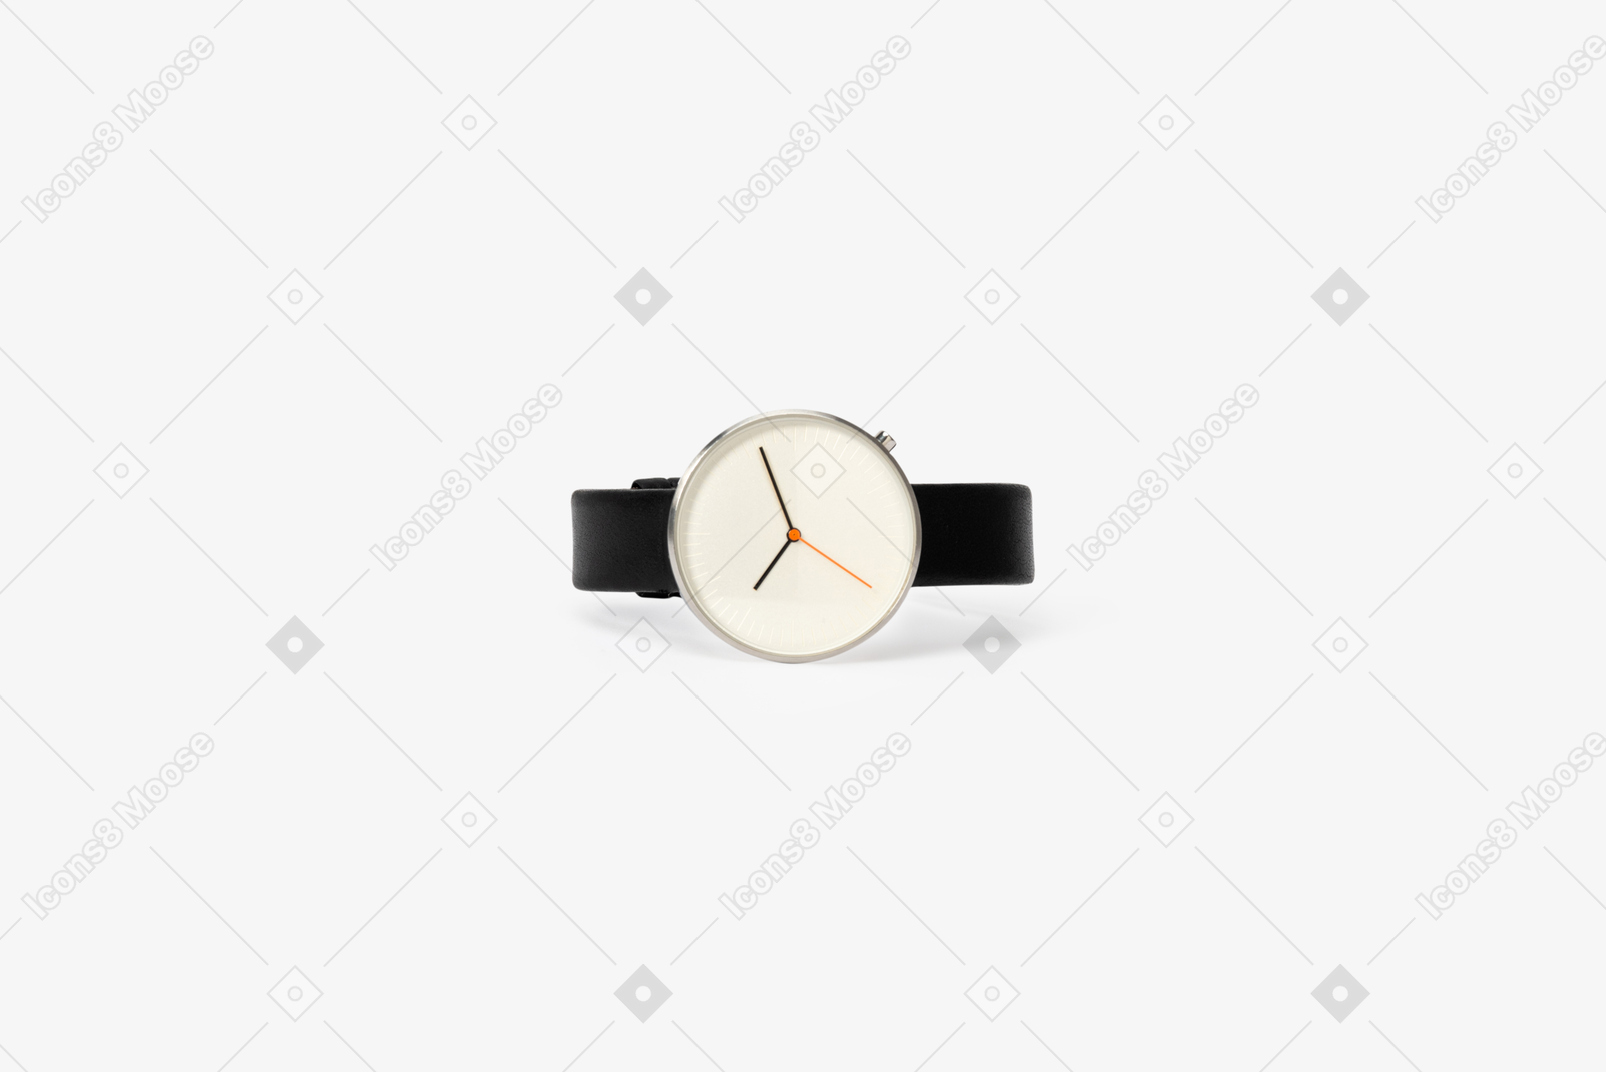 Stylish minimalist wrist watch